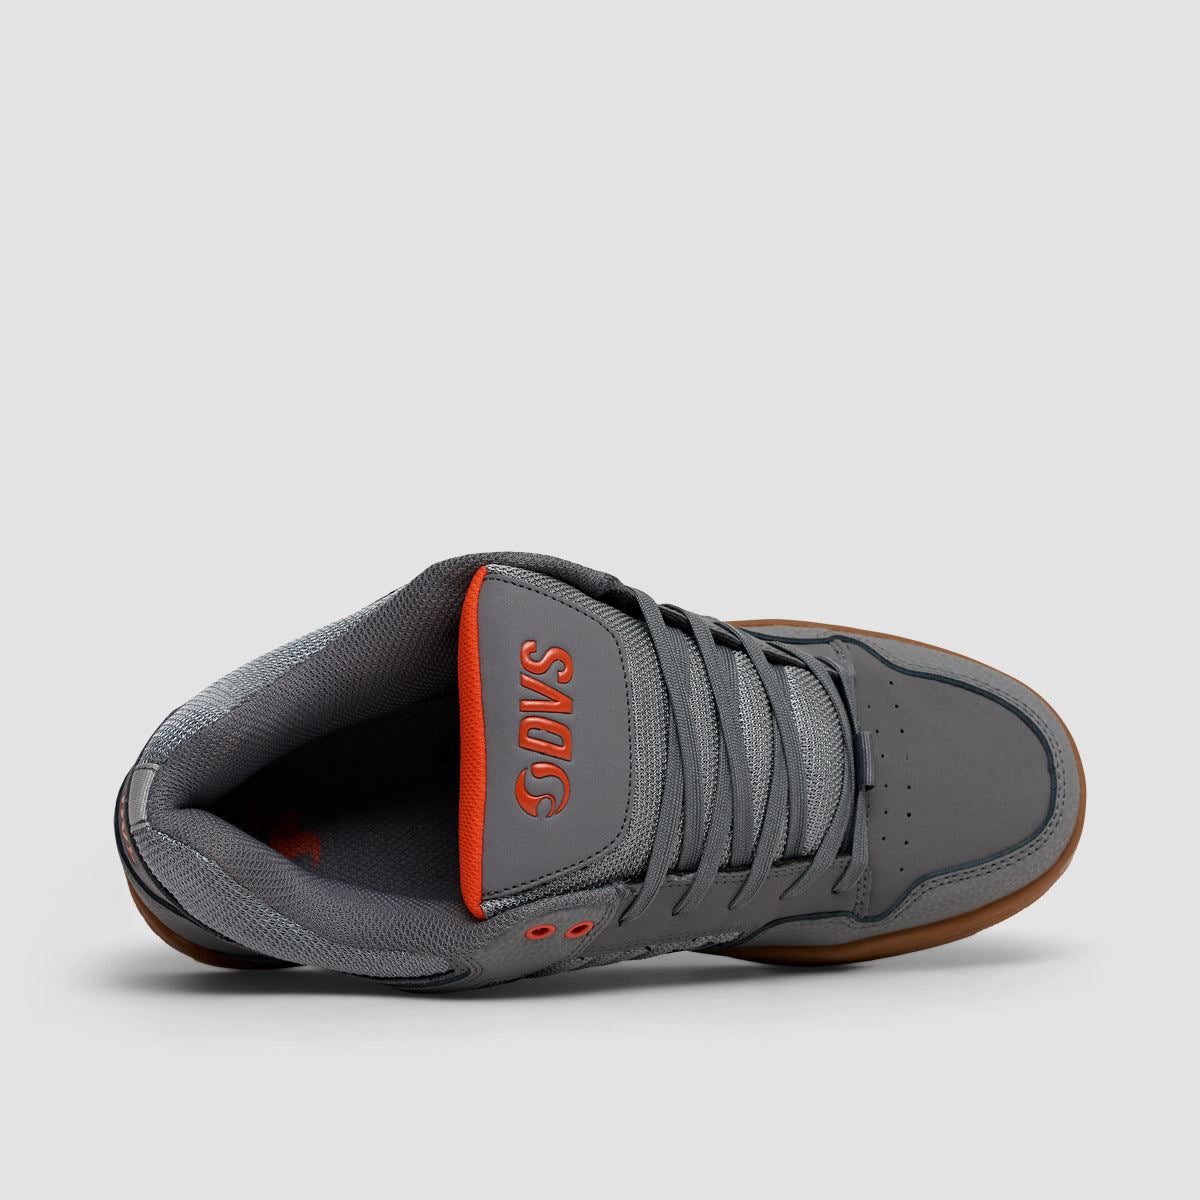 DVS Enduro 125 Shoes - Charcoal/Grey/Gum Nubuck